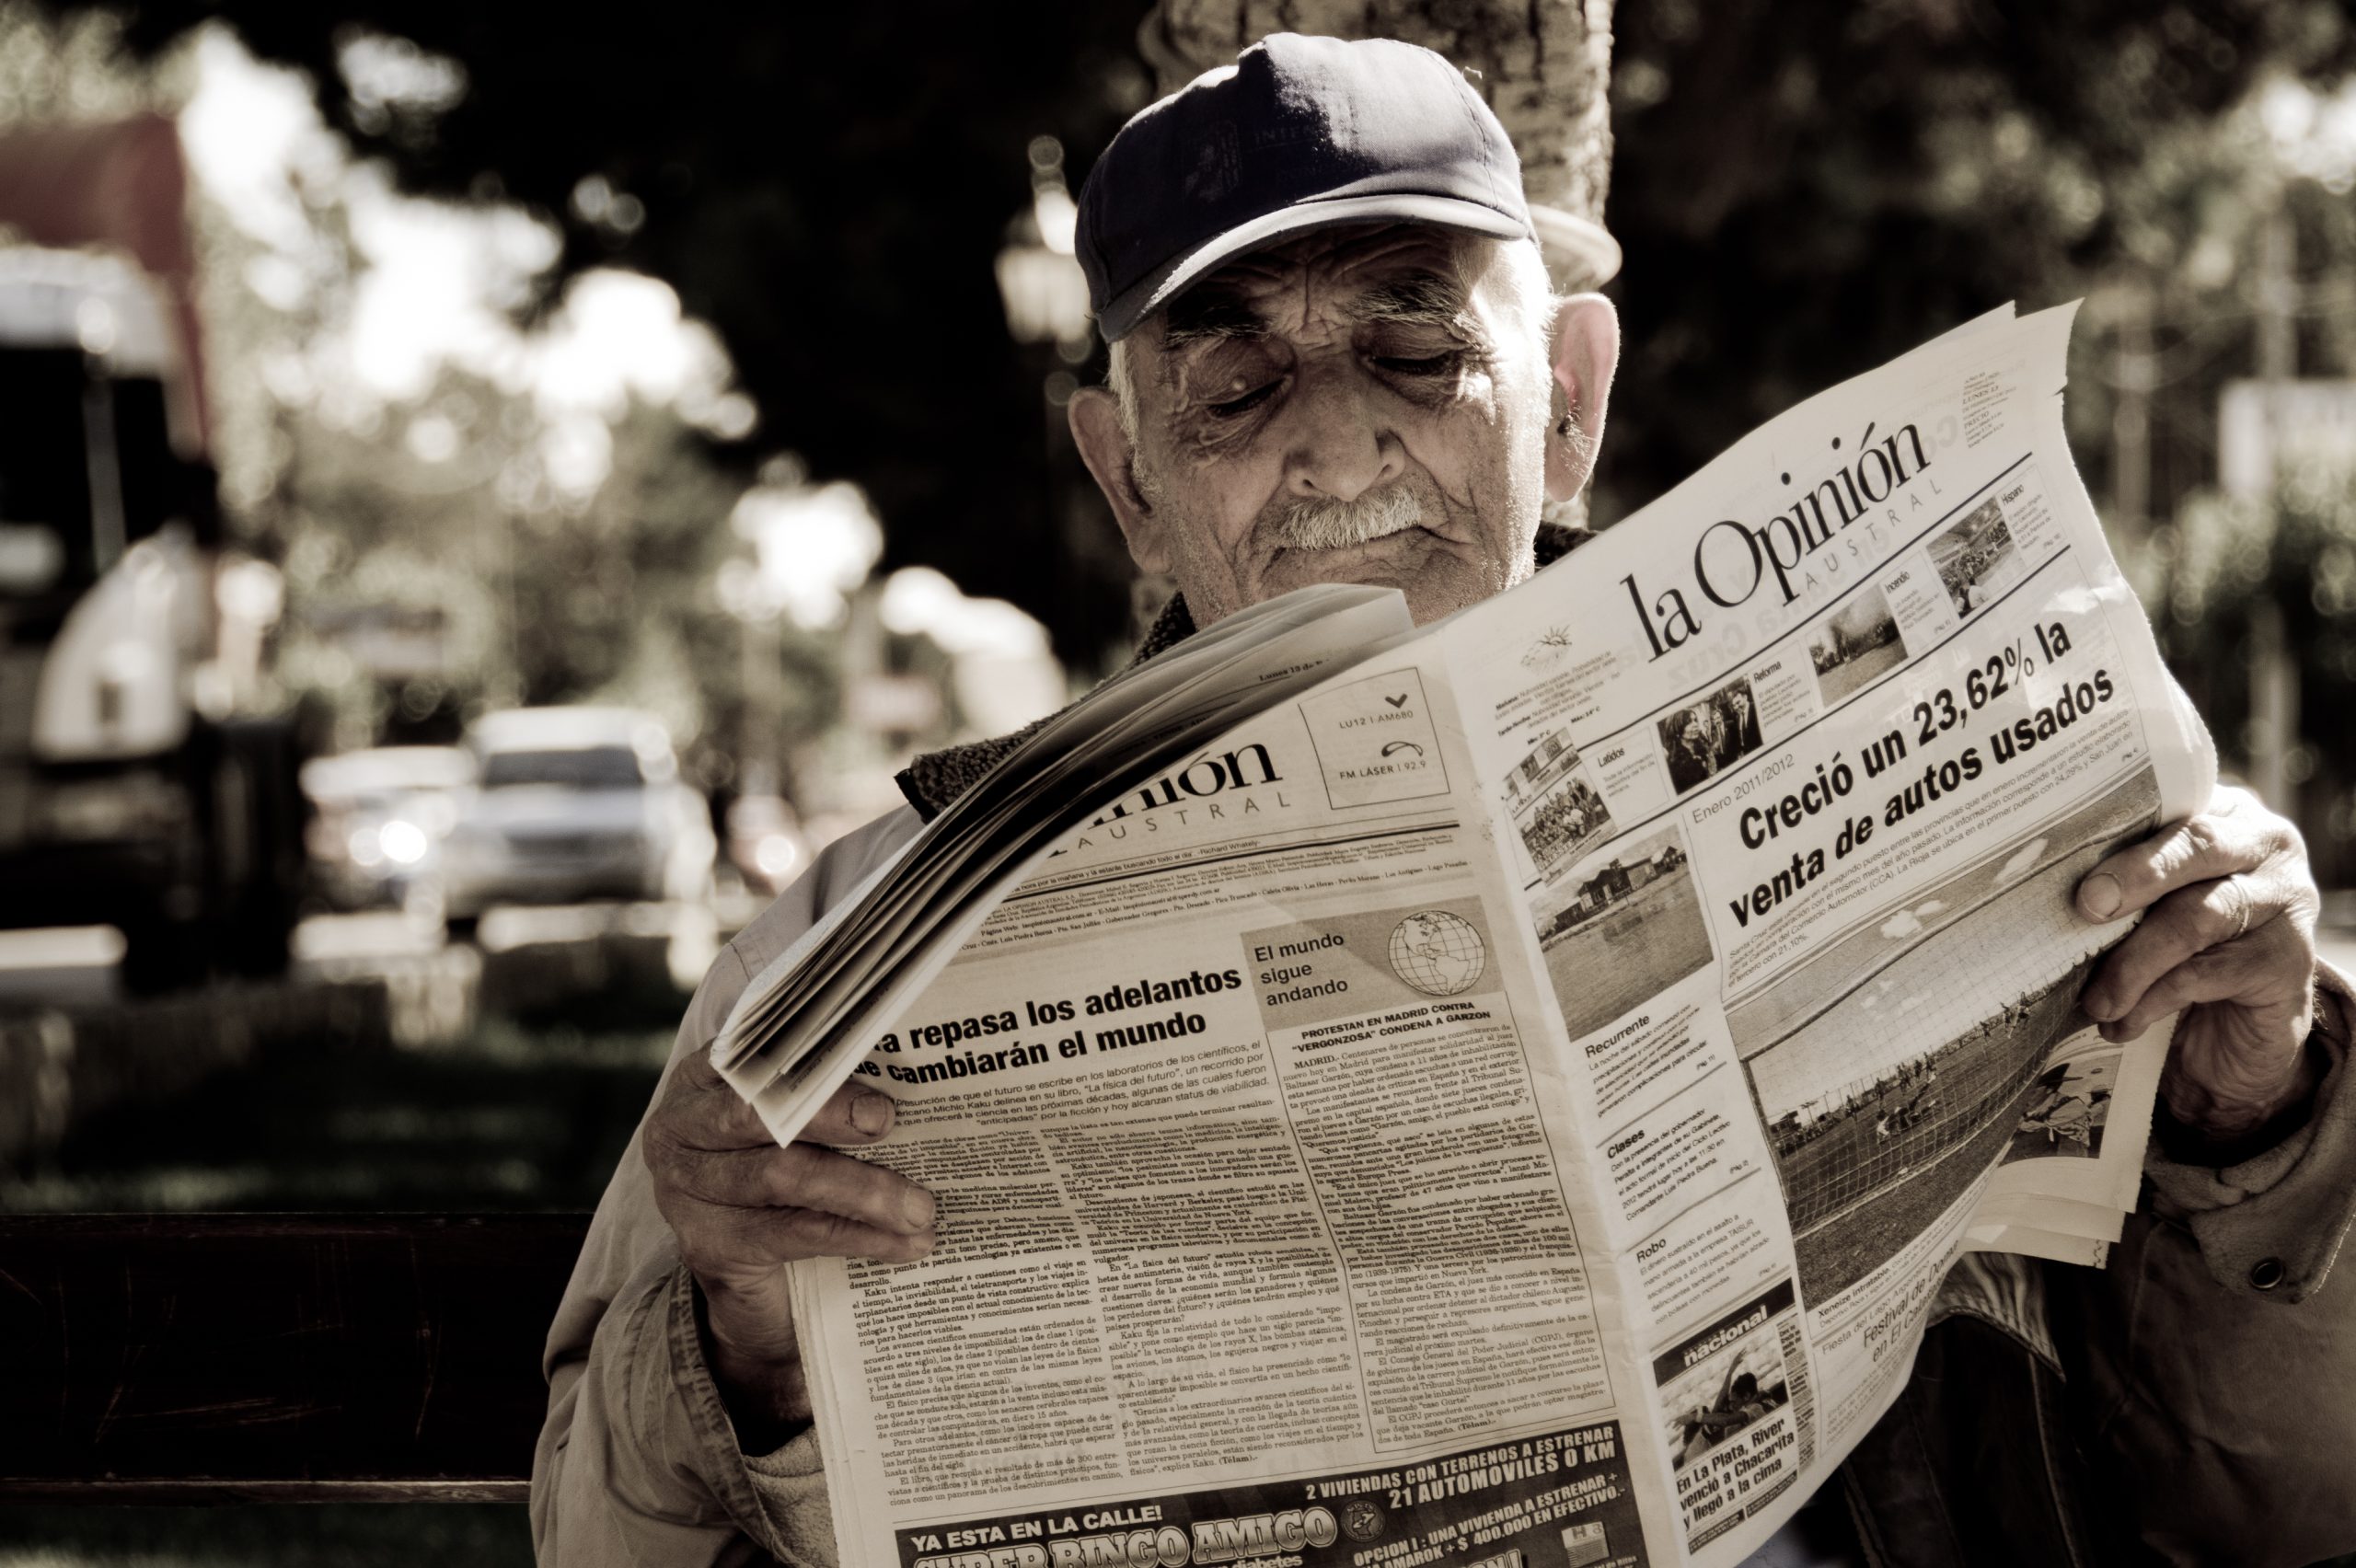 An old man reading a newspaper